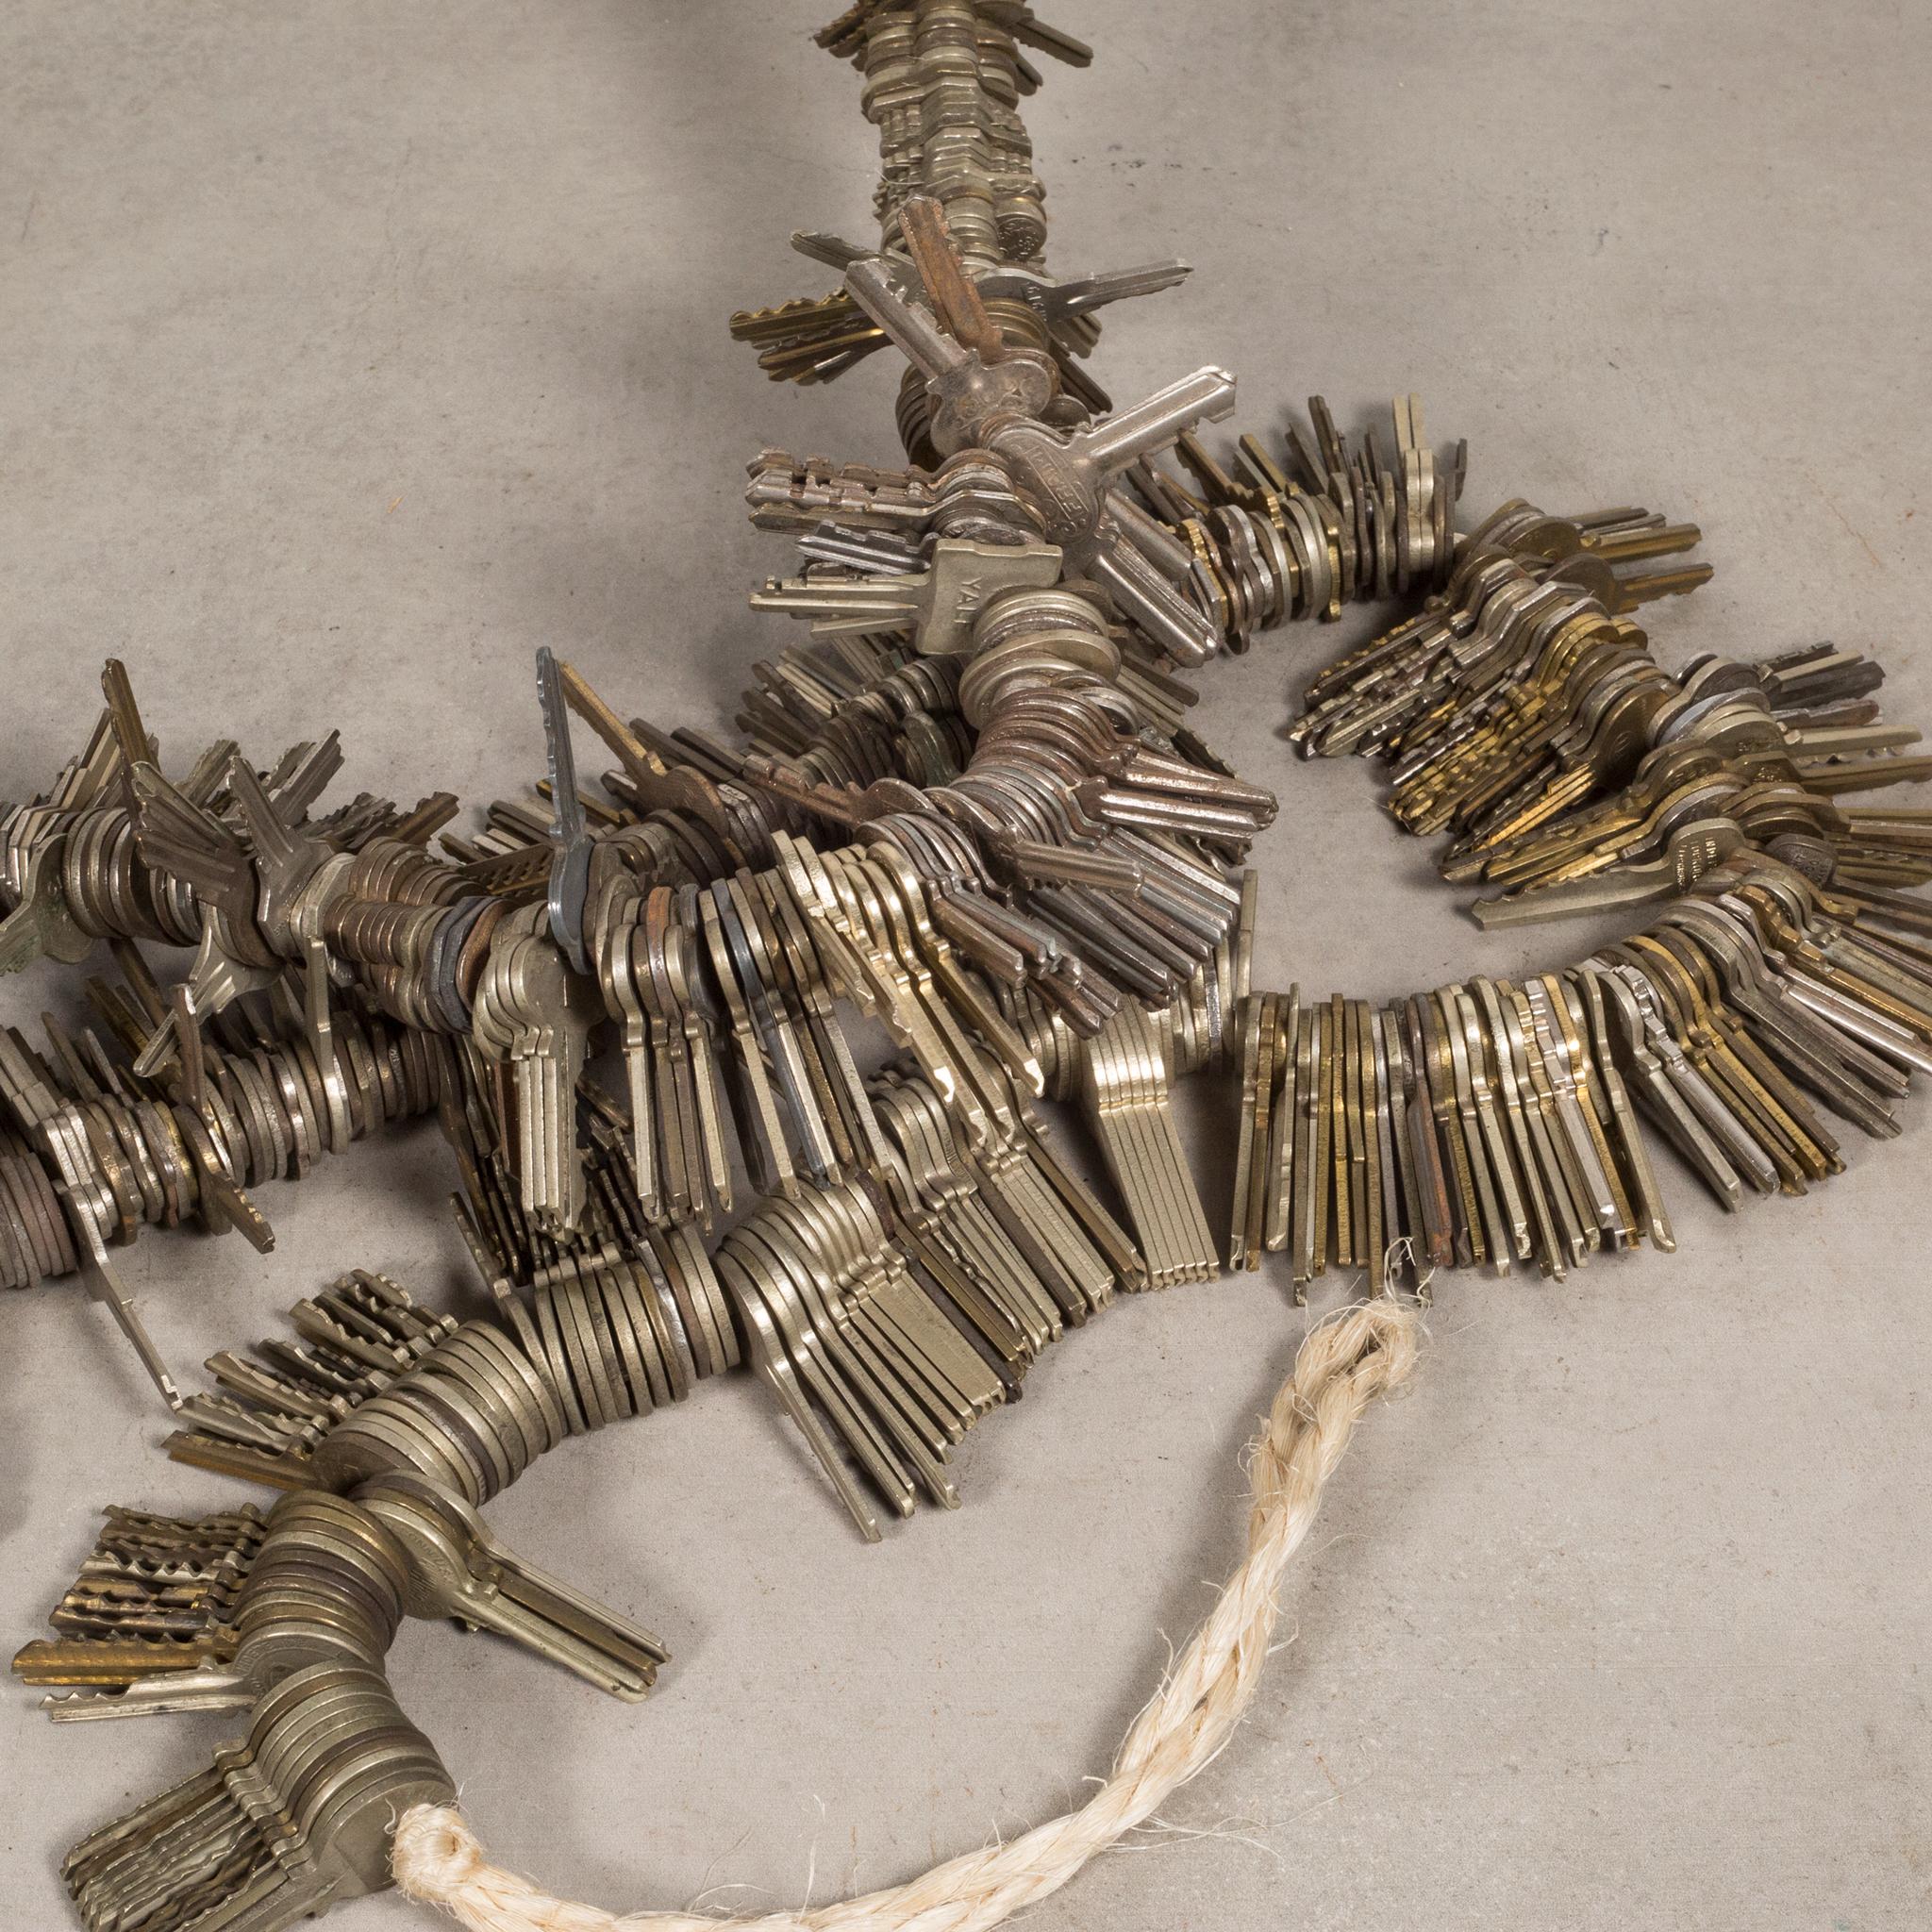 American Vintage Brass and Steel Key Sculpture, c.1930-1970